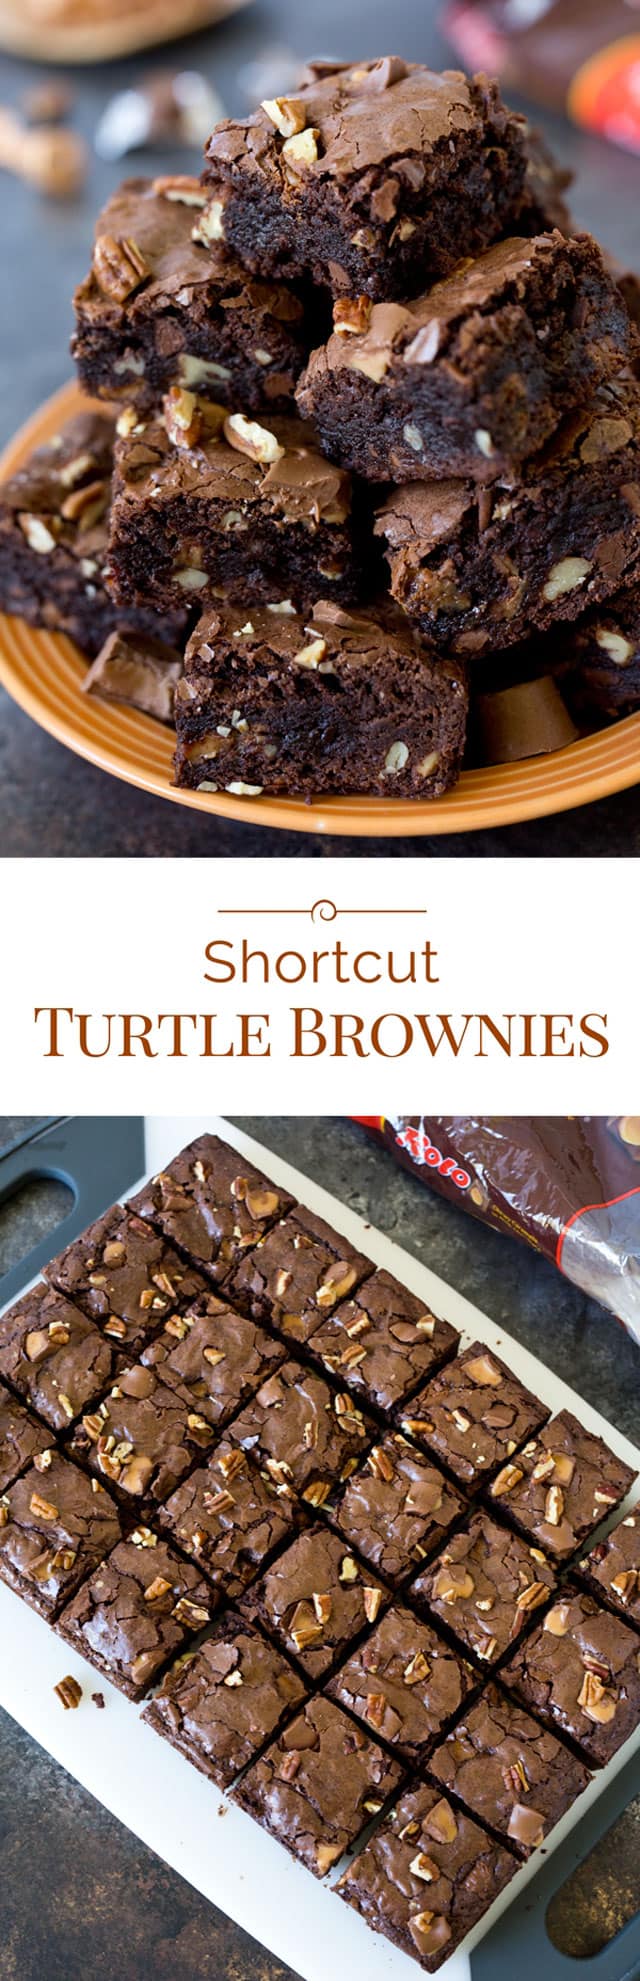 Shortcut-Turtle-Brownies-Collage-Barbara-Bakes